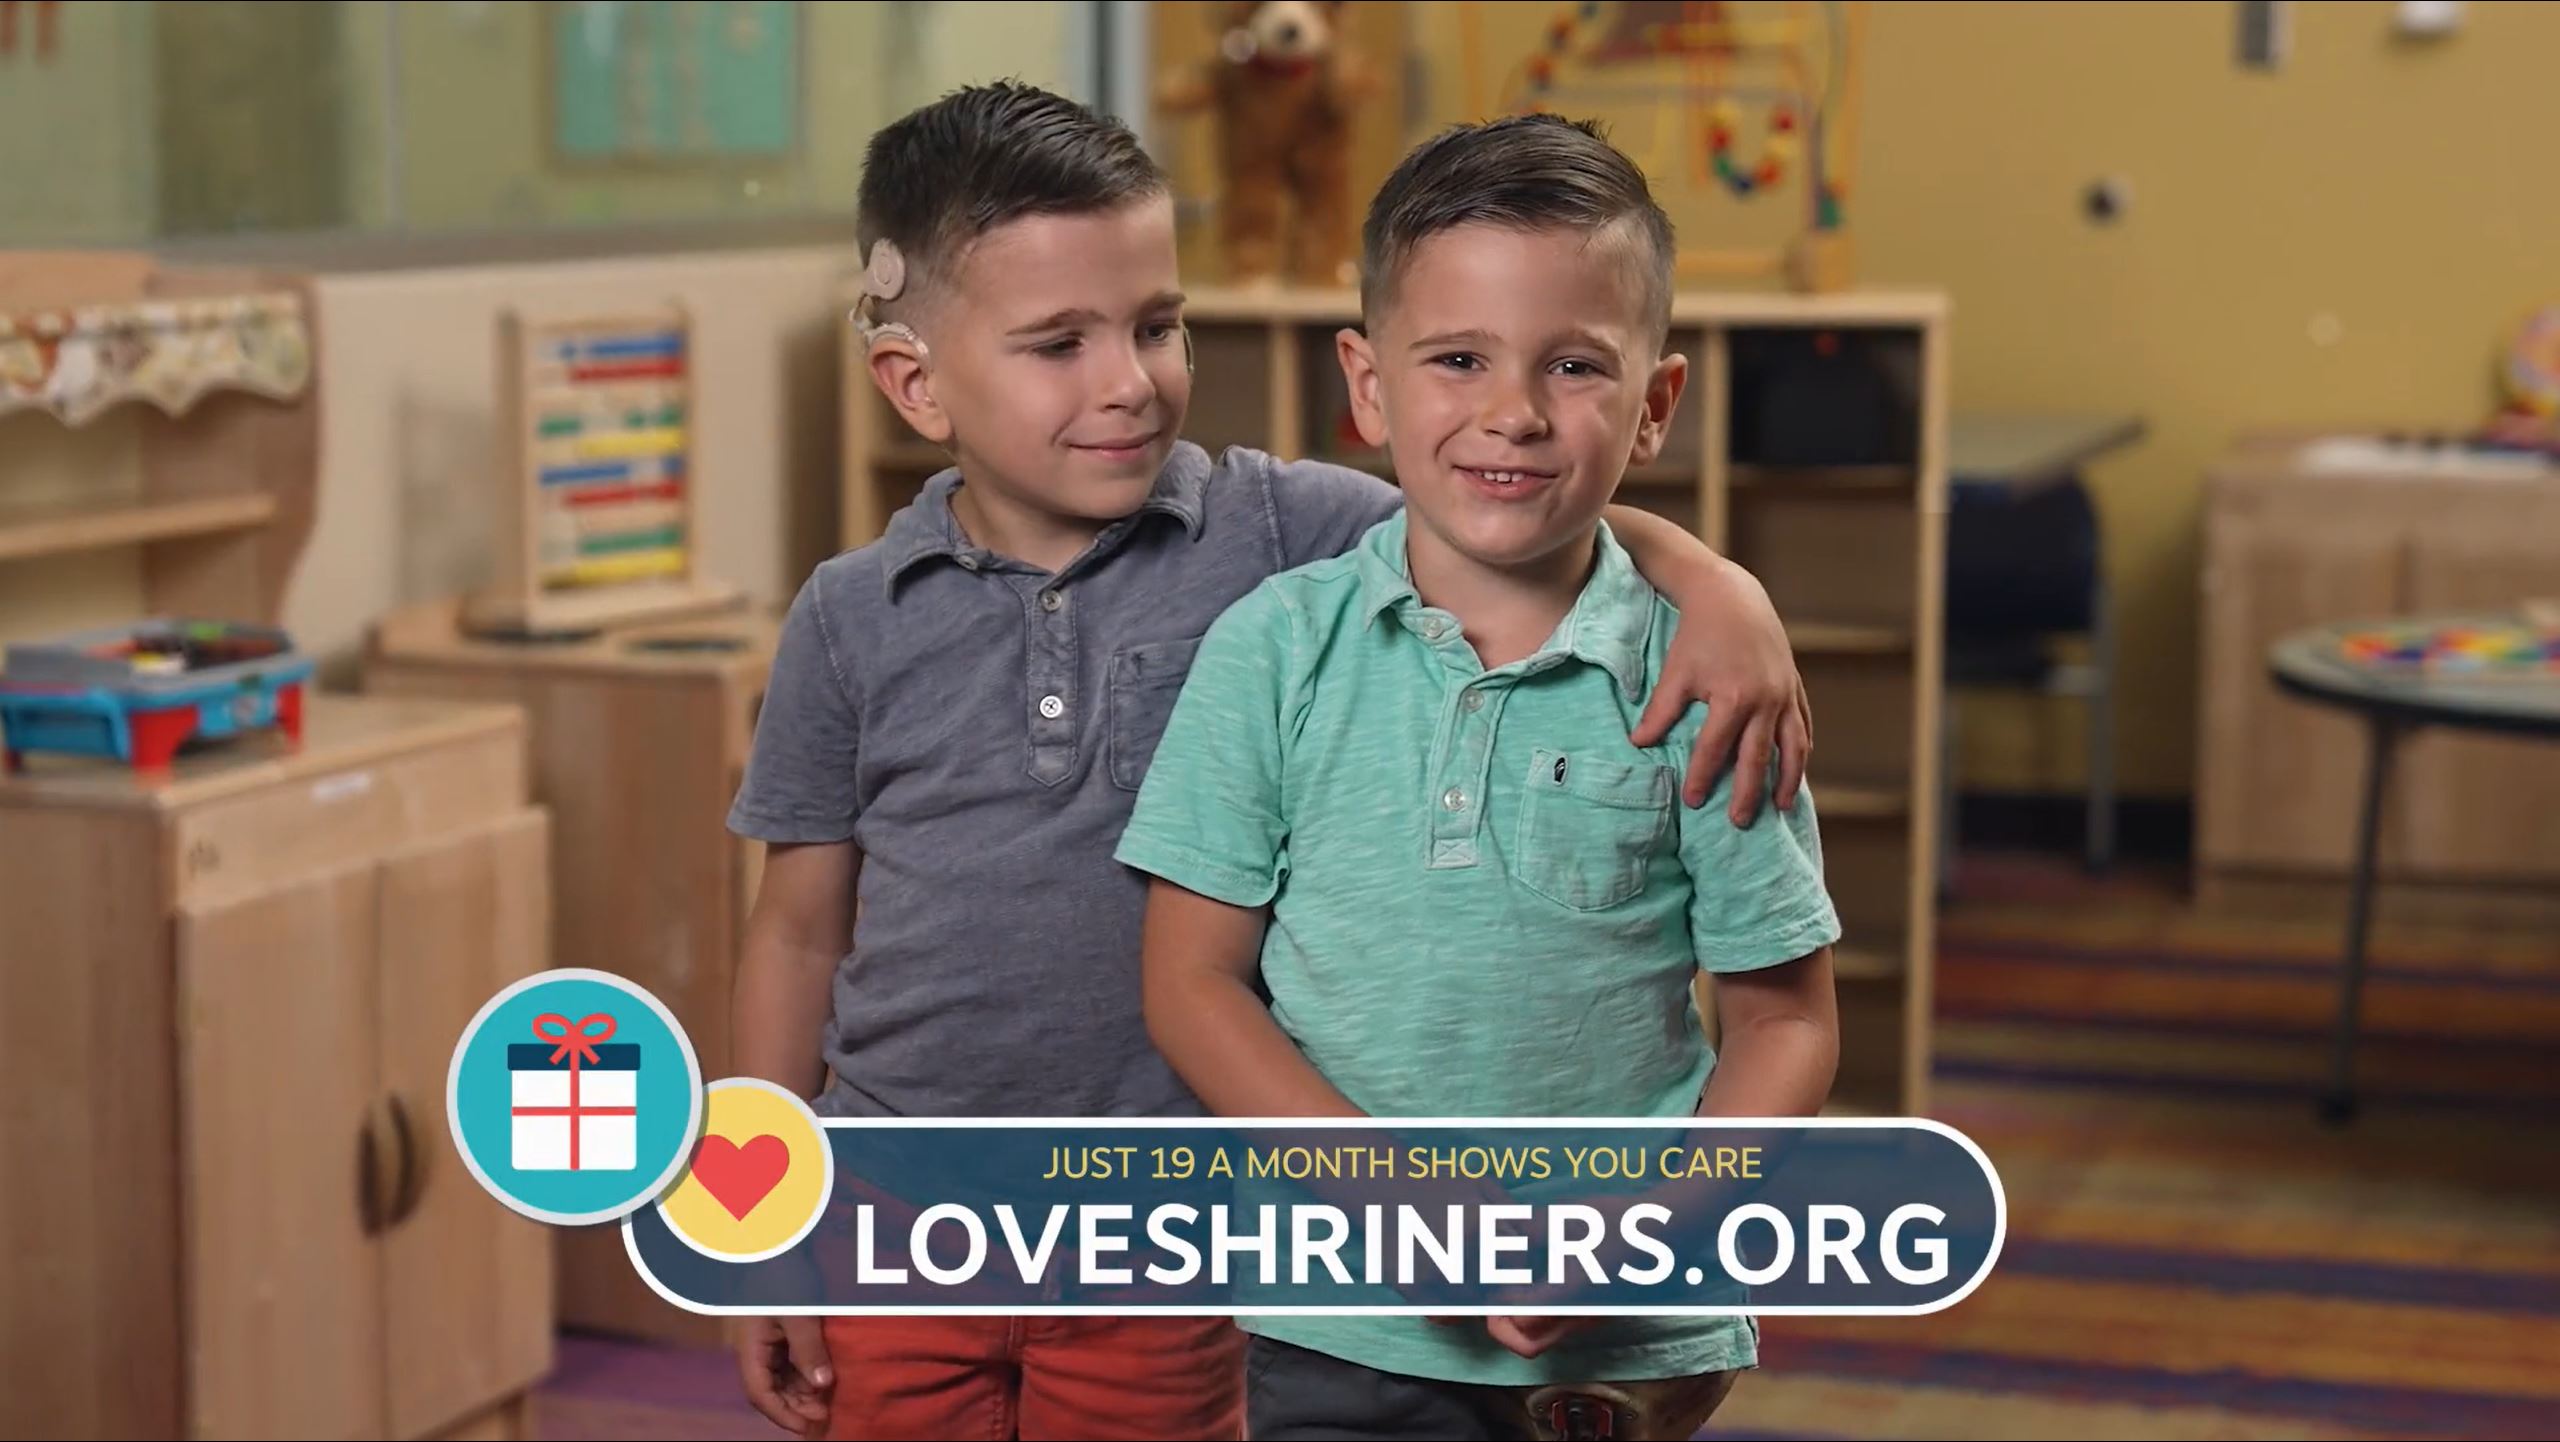 love shriners.org commercial